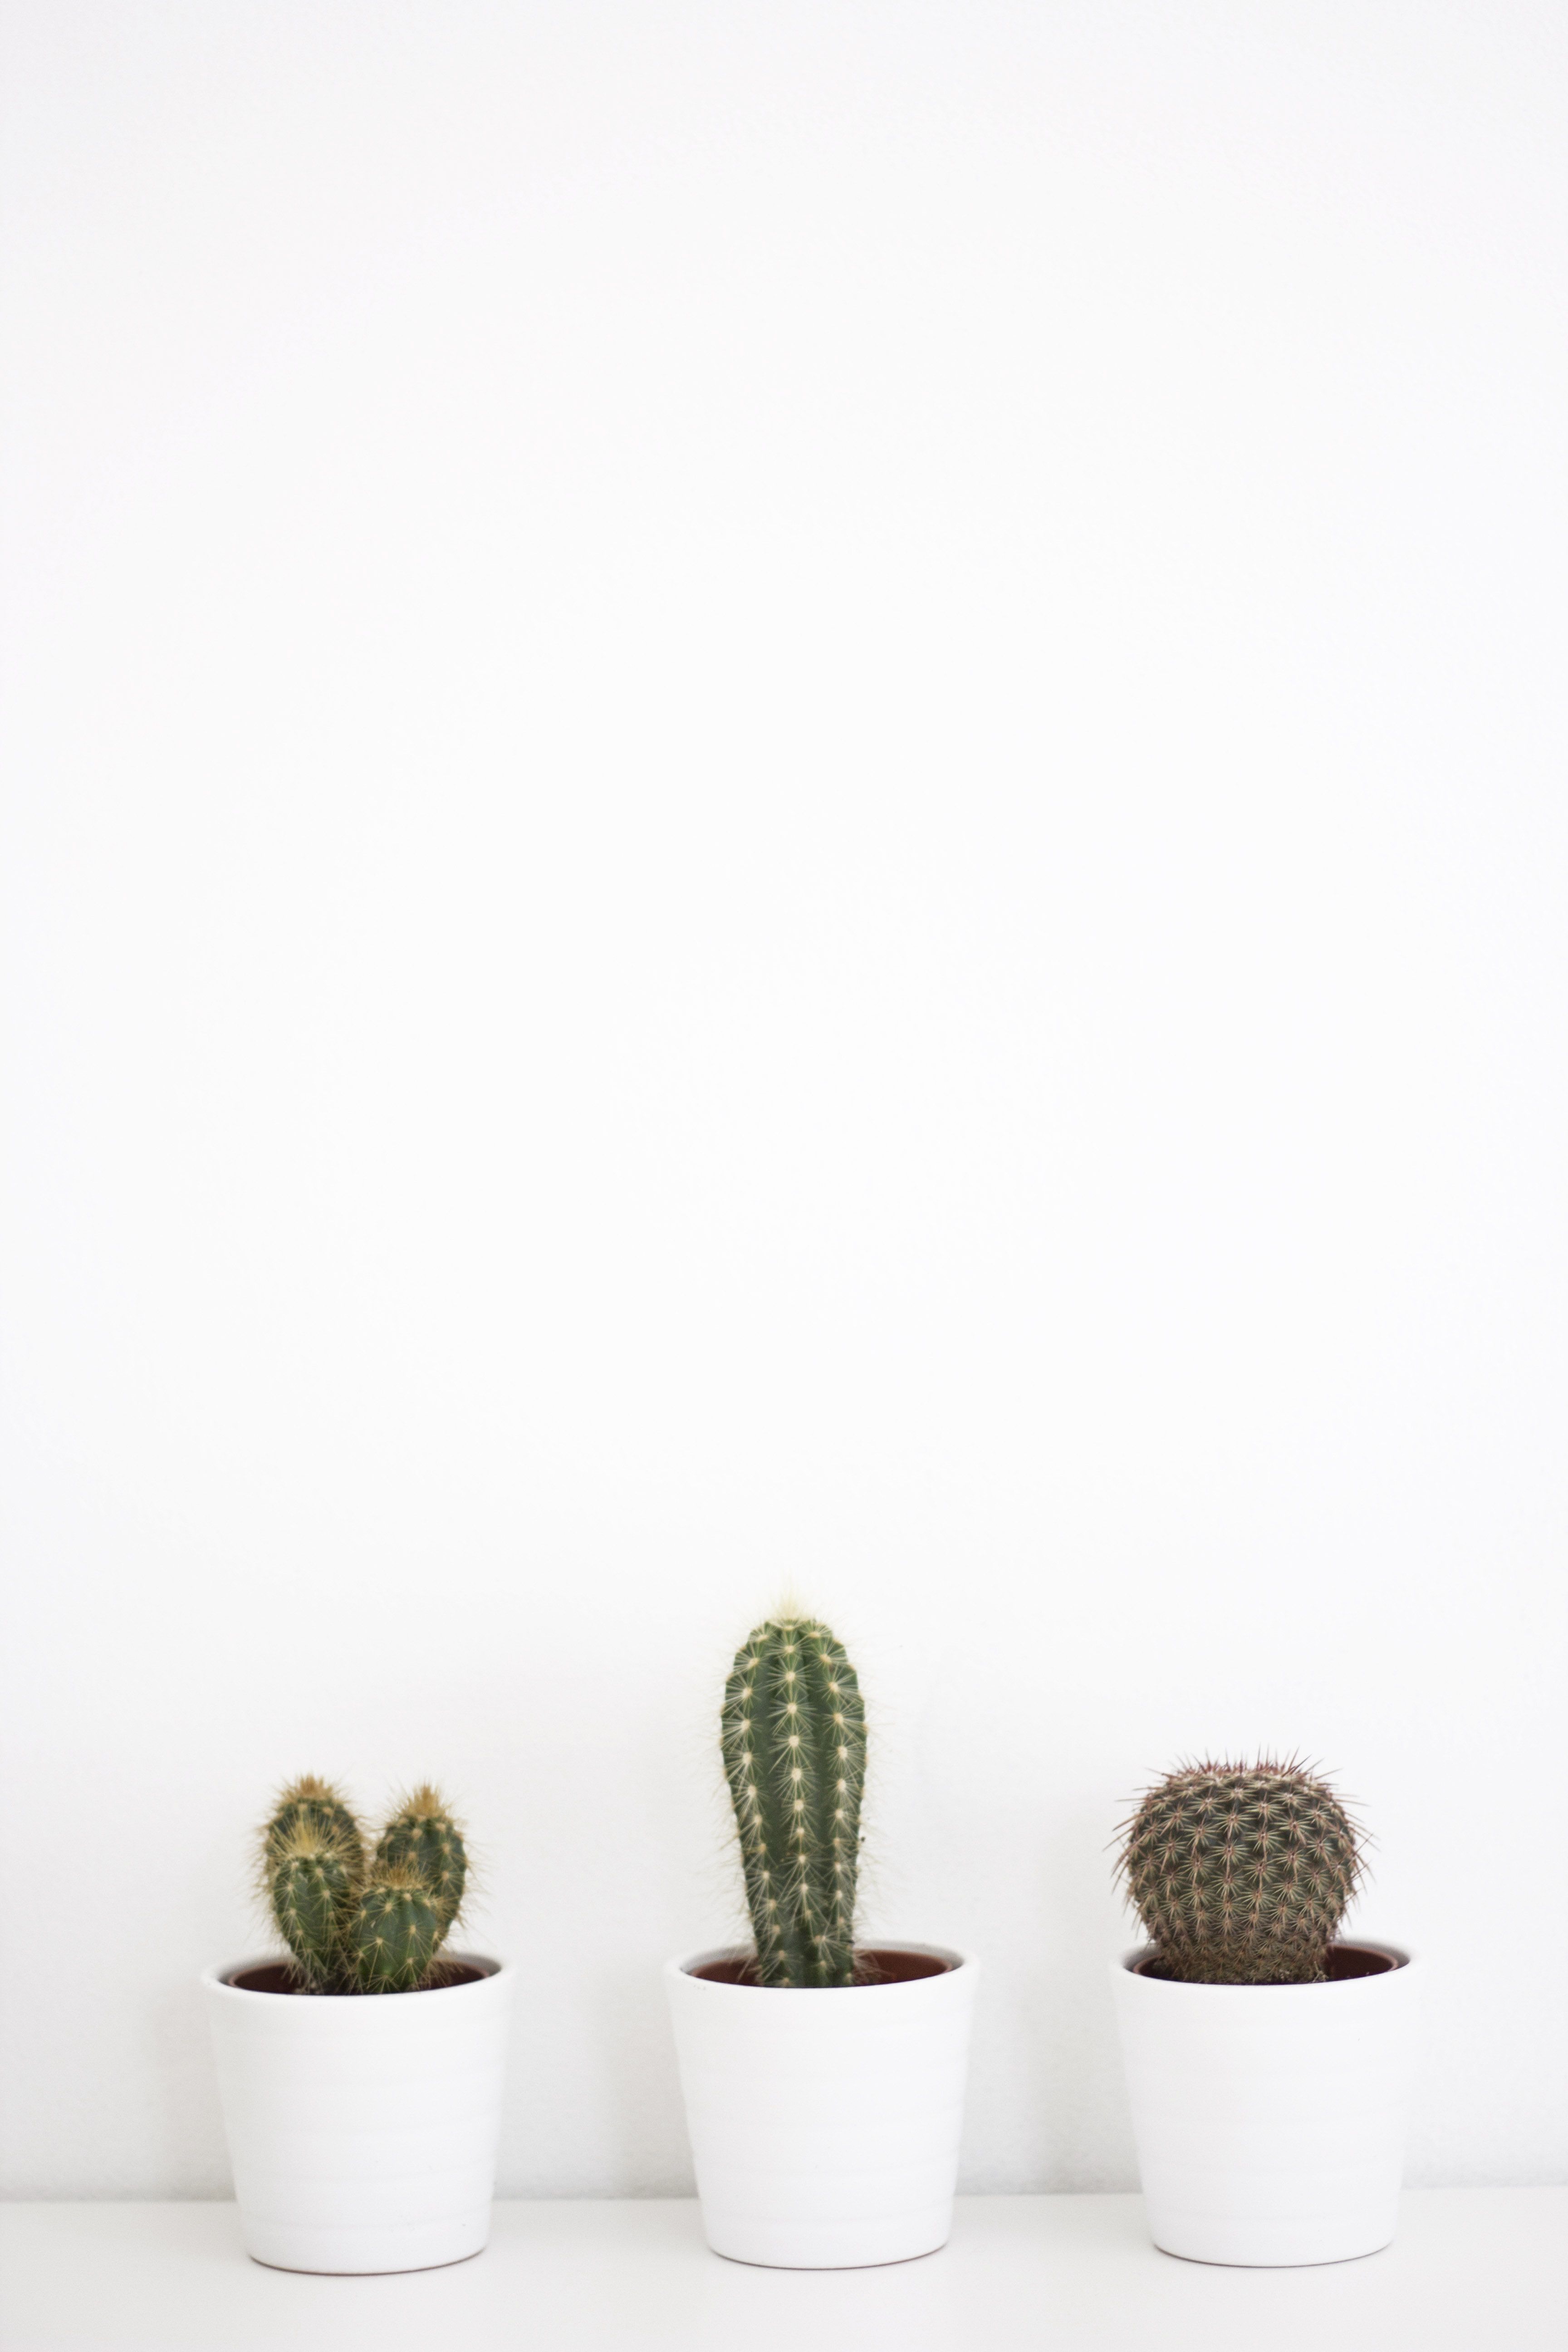 Cactus Wallpaper